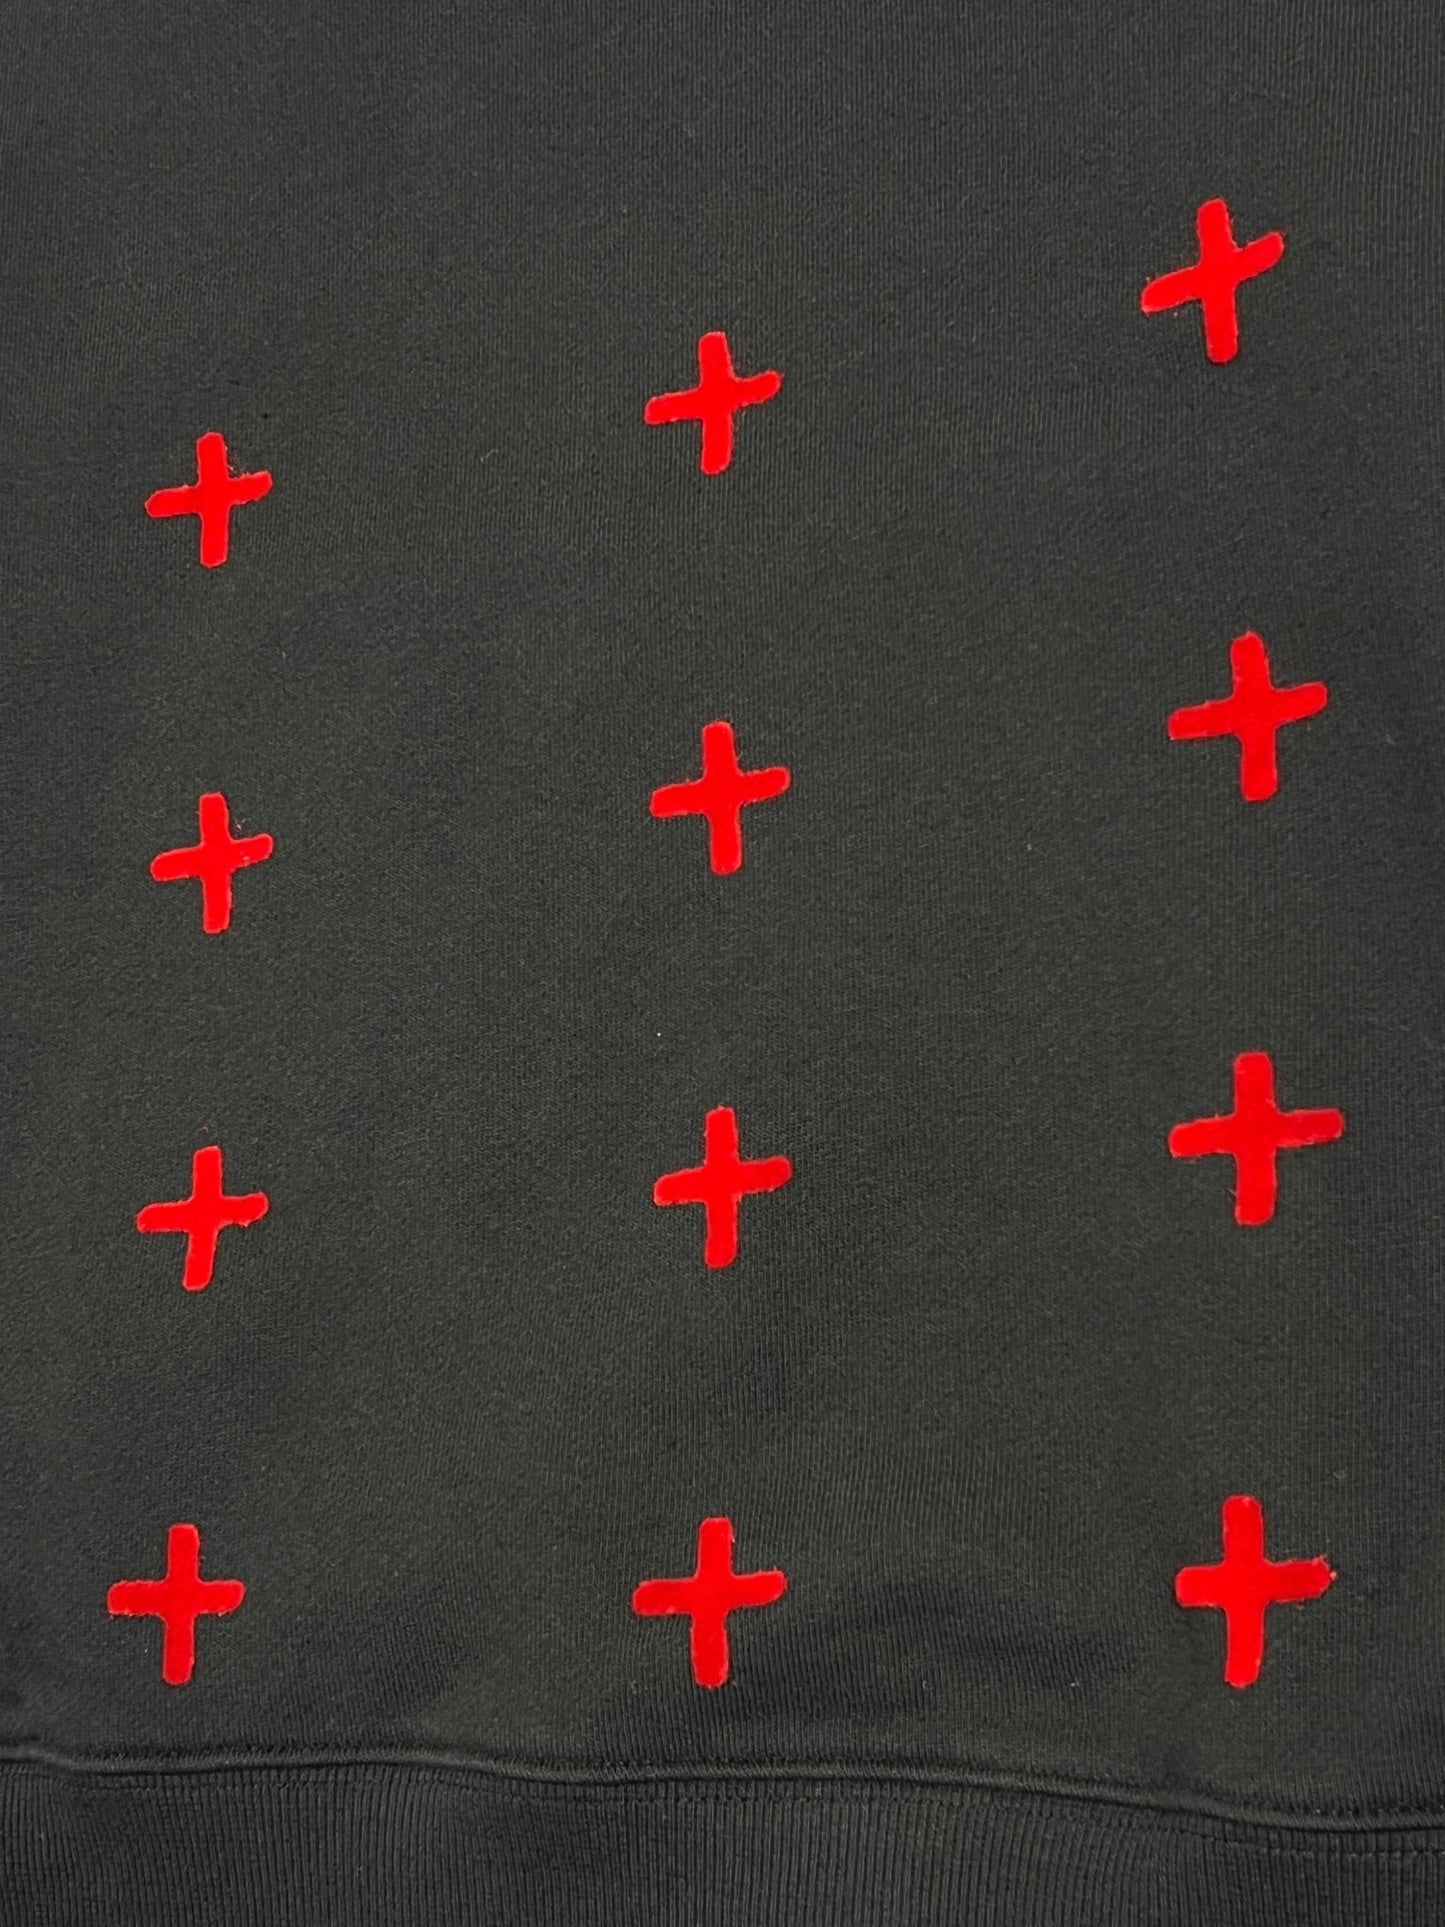 A KSUBI jet black sweatshirt with red crosses on it.